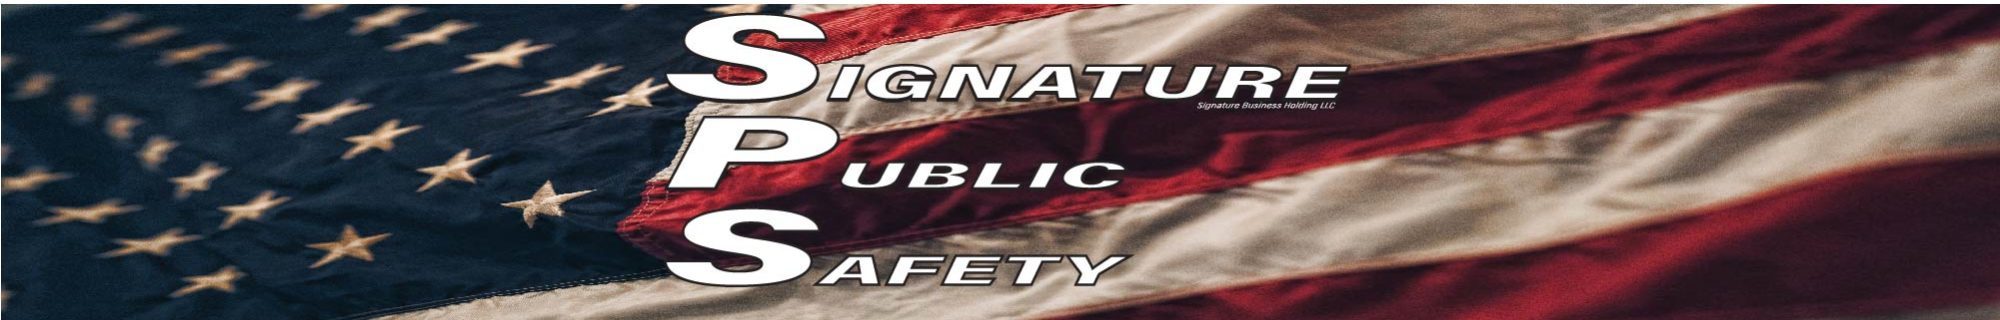 Signature Public Safety